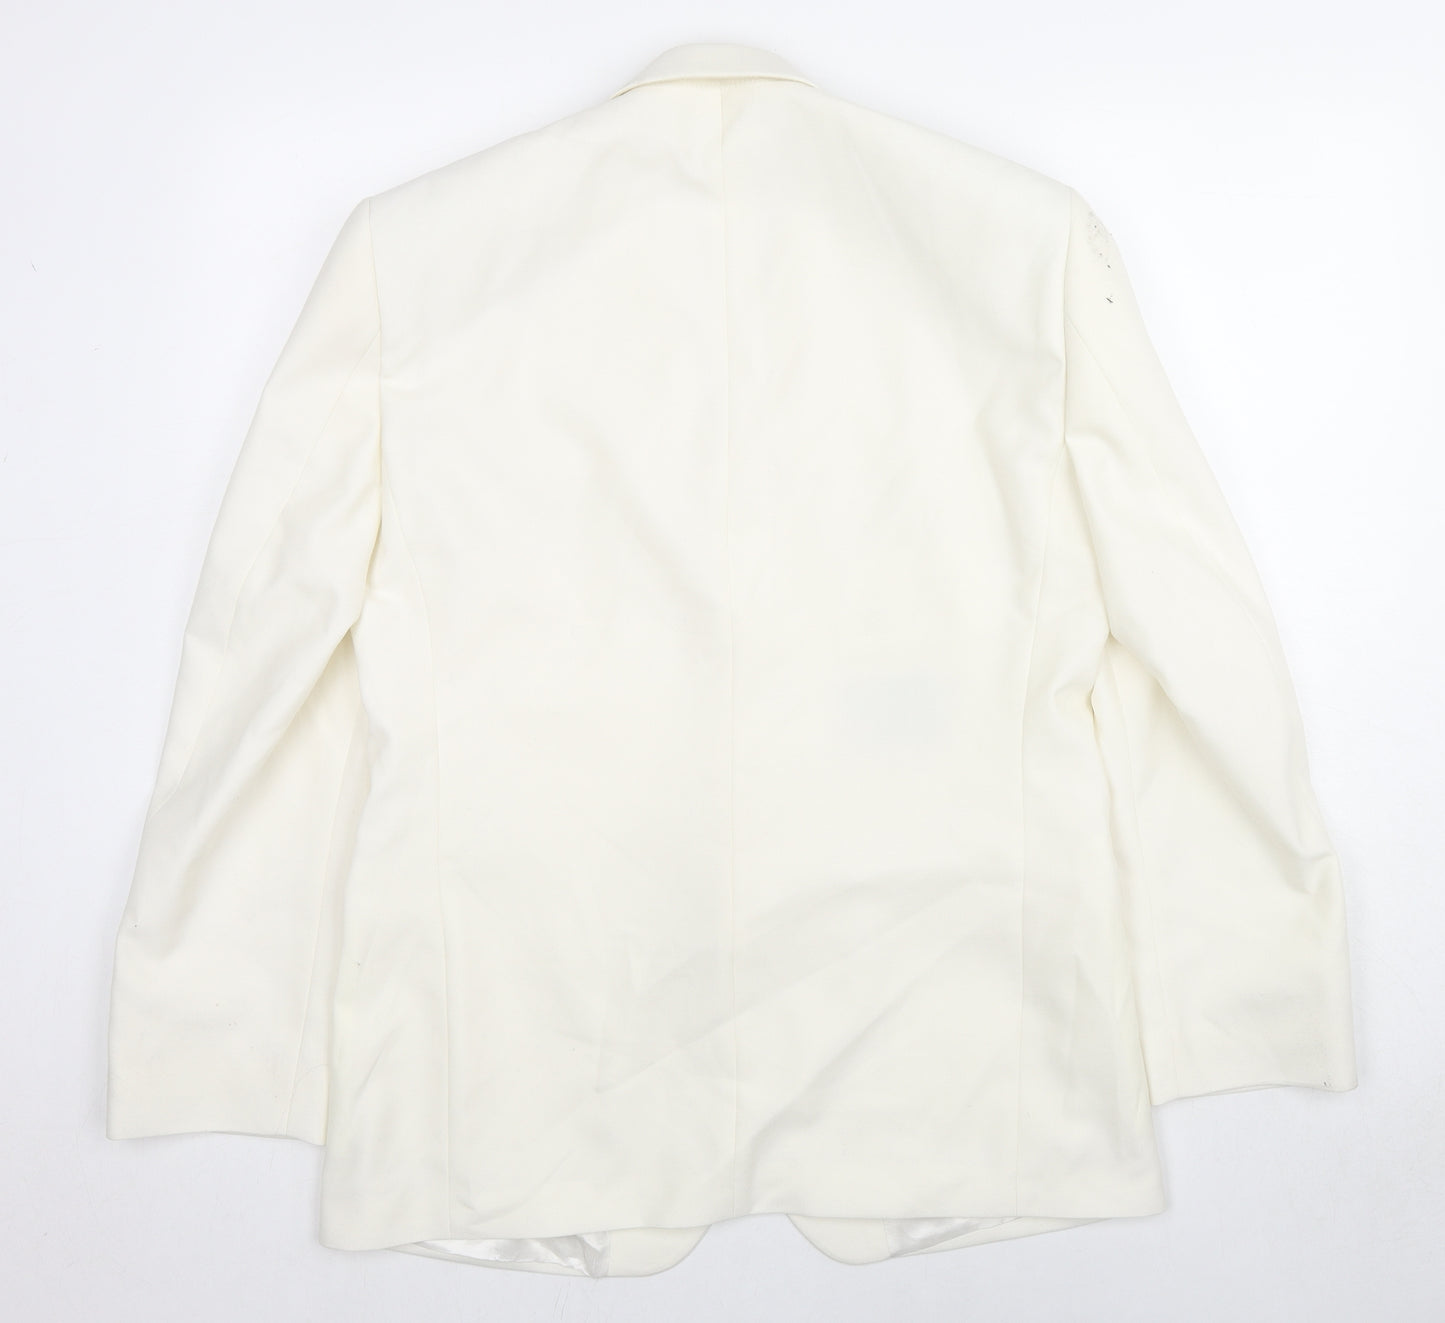 Moss Bros Mens White Polyester Tuxedo Suit Jacket Size 40 Regular